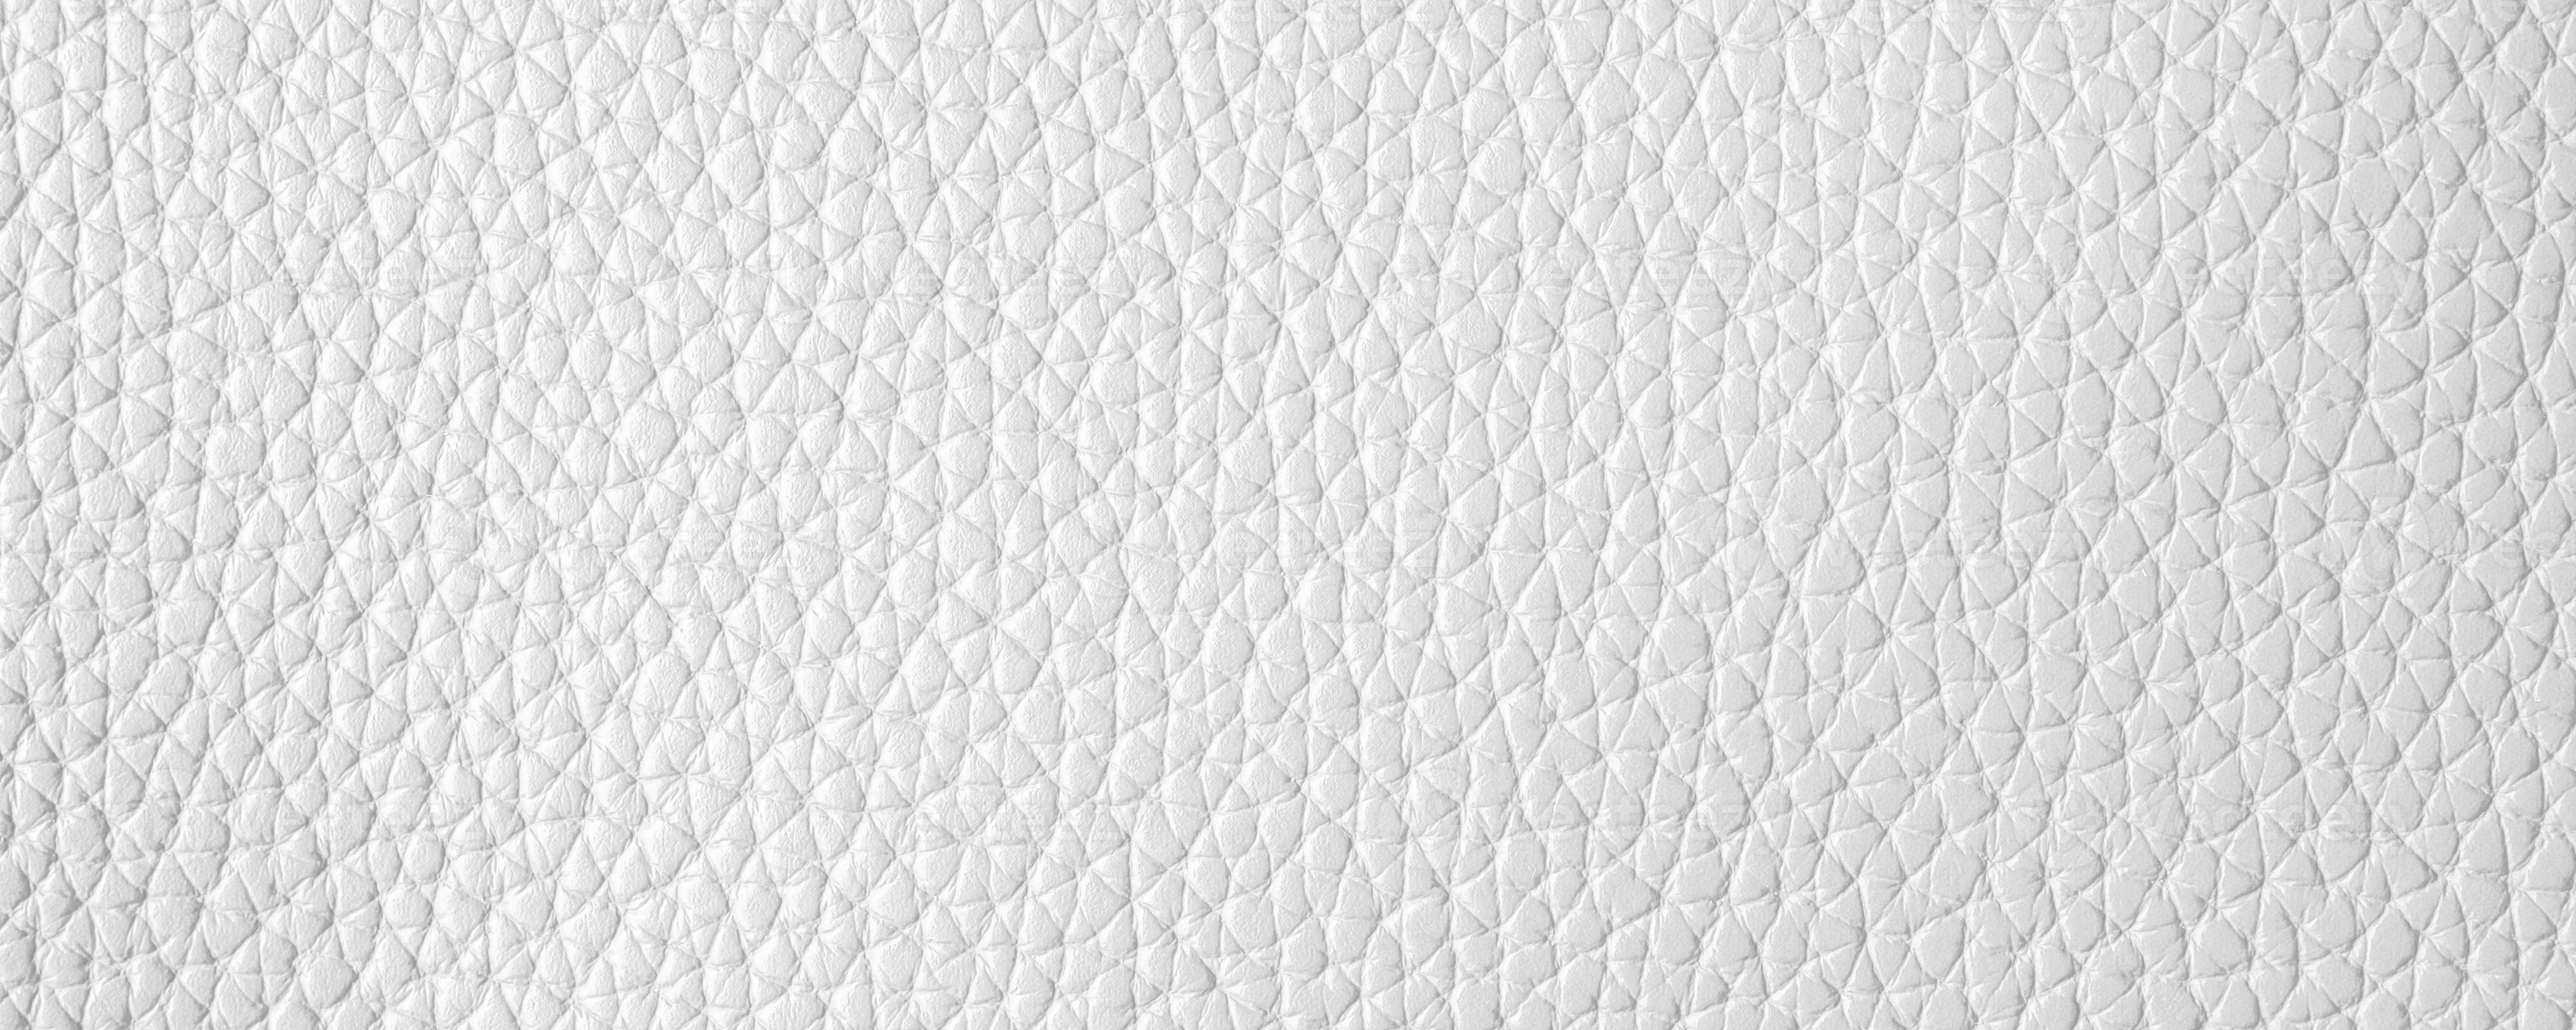 White leather texture luxury background 18785323 Stock Photo at Vecteezy